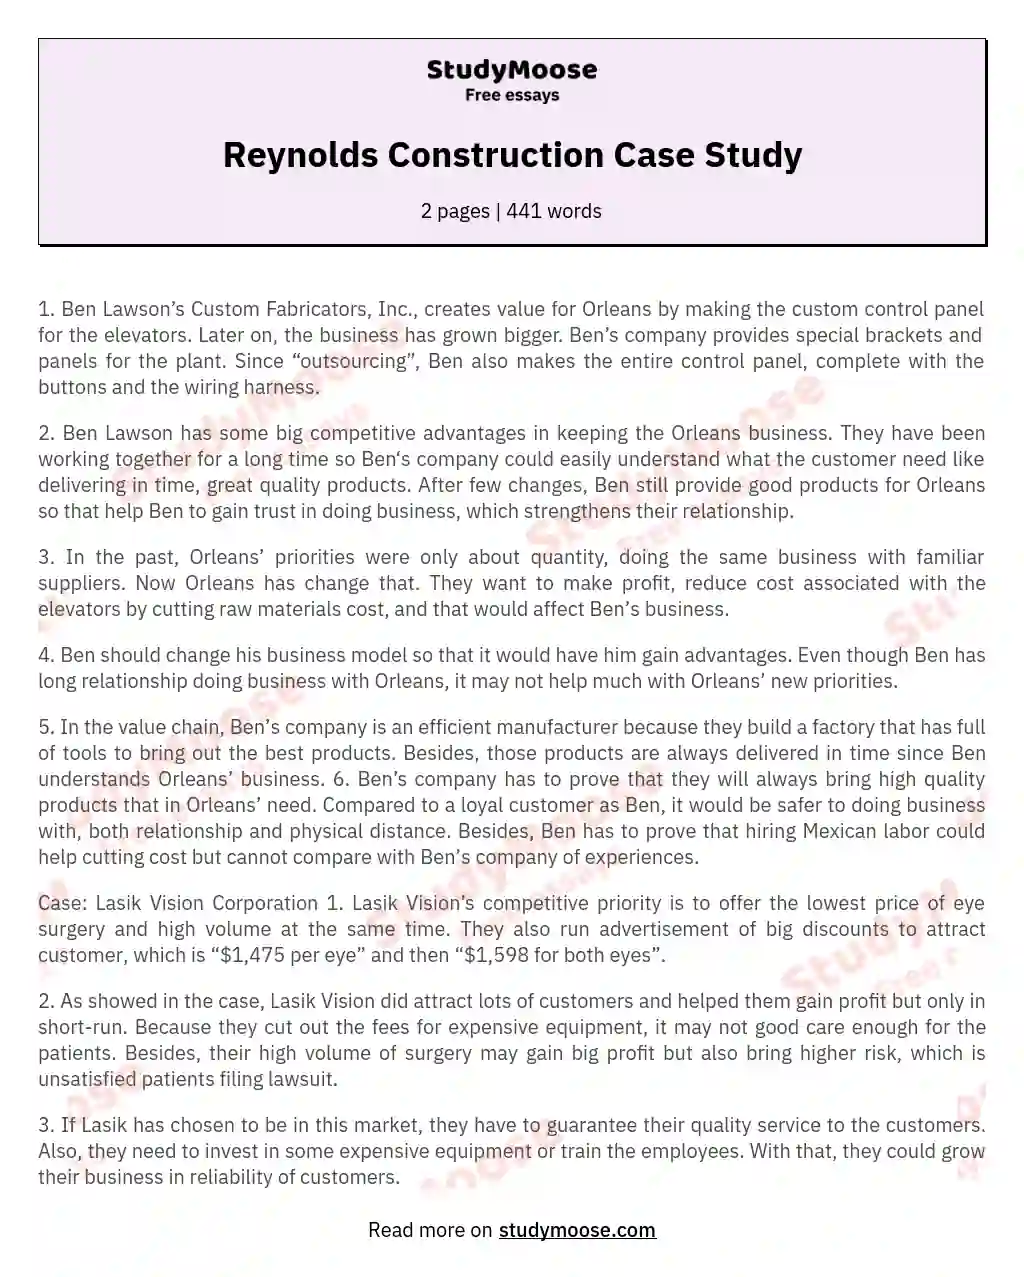 Reynolds Construction Case Study essay